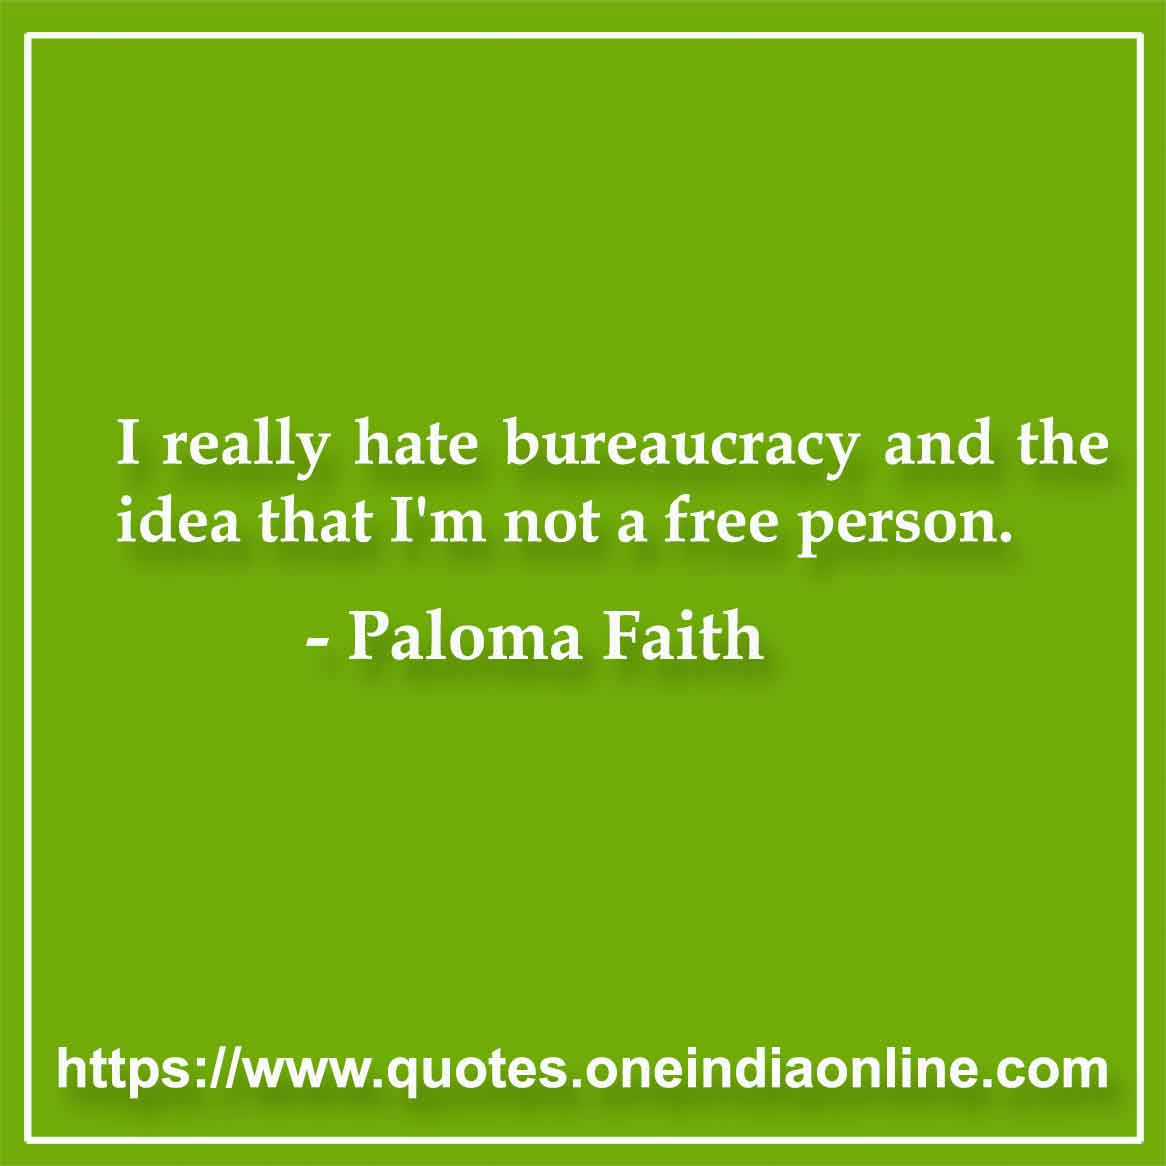 I really hate bureaucracy and the idea that I'm not a free person.

- Paloma Faith